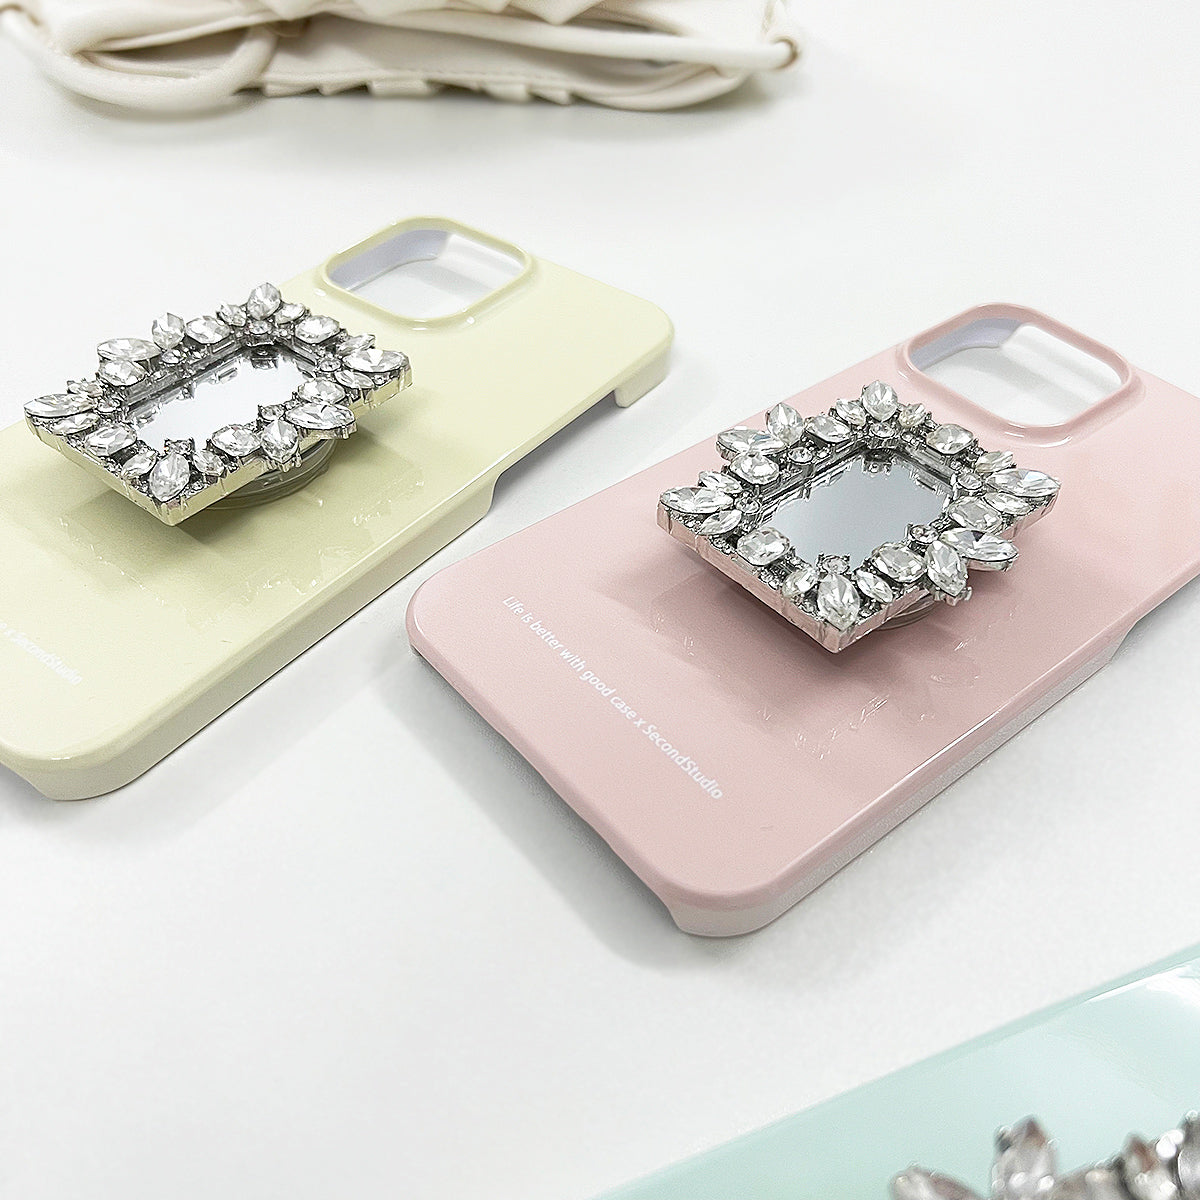 3color bijou mirror iPhonecase